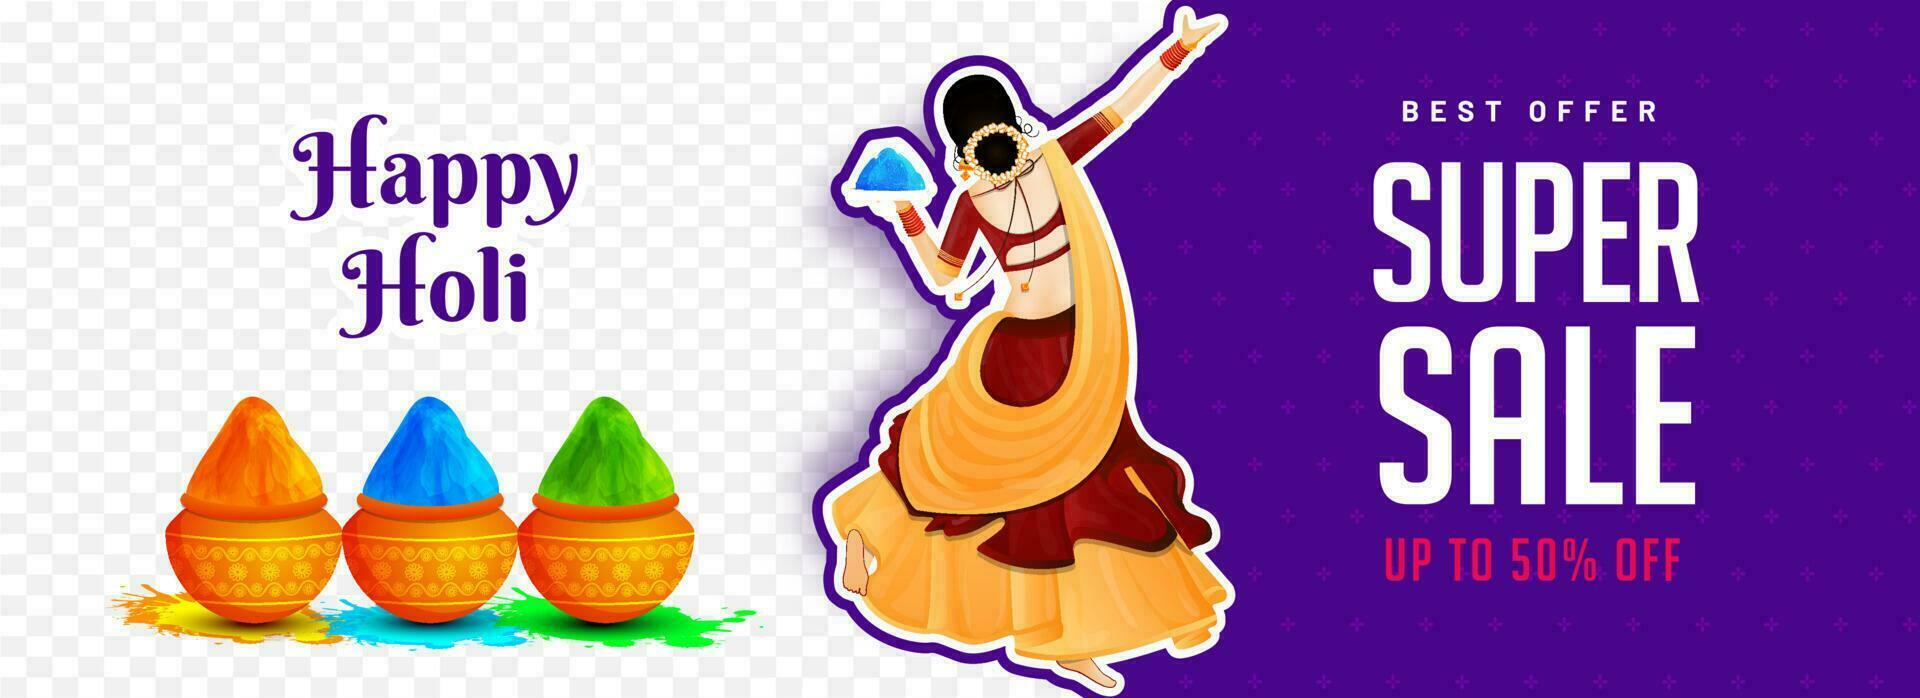 Super sale header or banner design with illustration of dancing girl character and discount offer for Holi festival celebration concept. vector